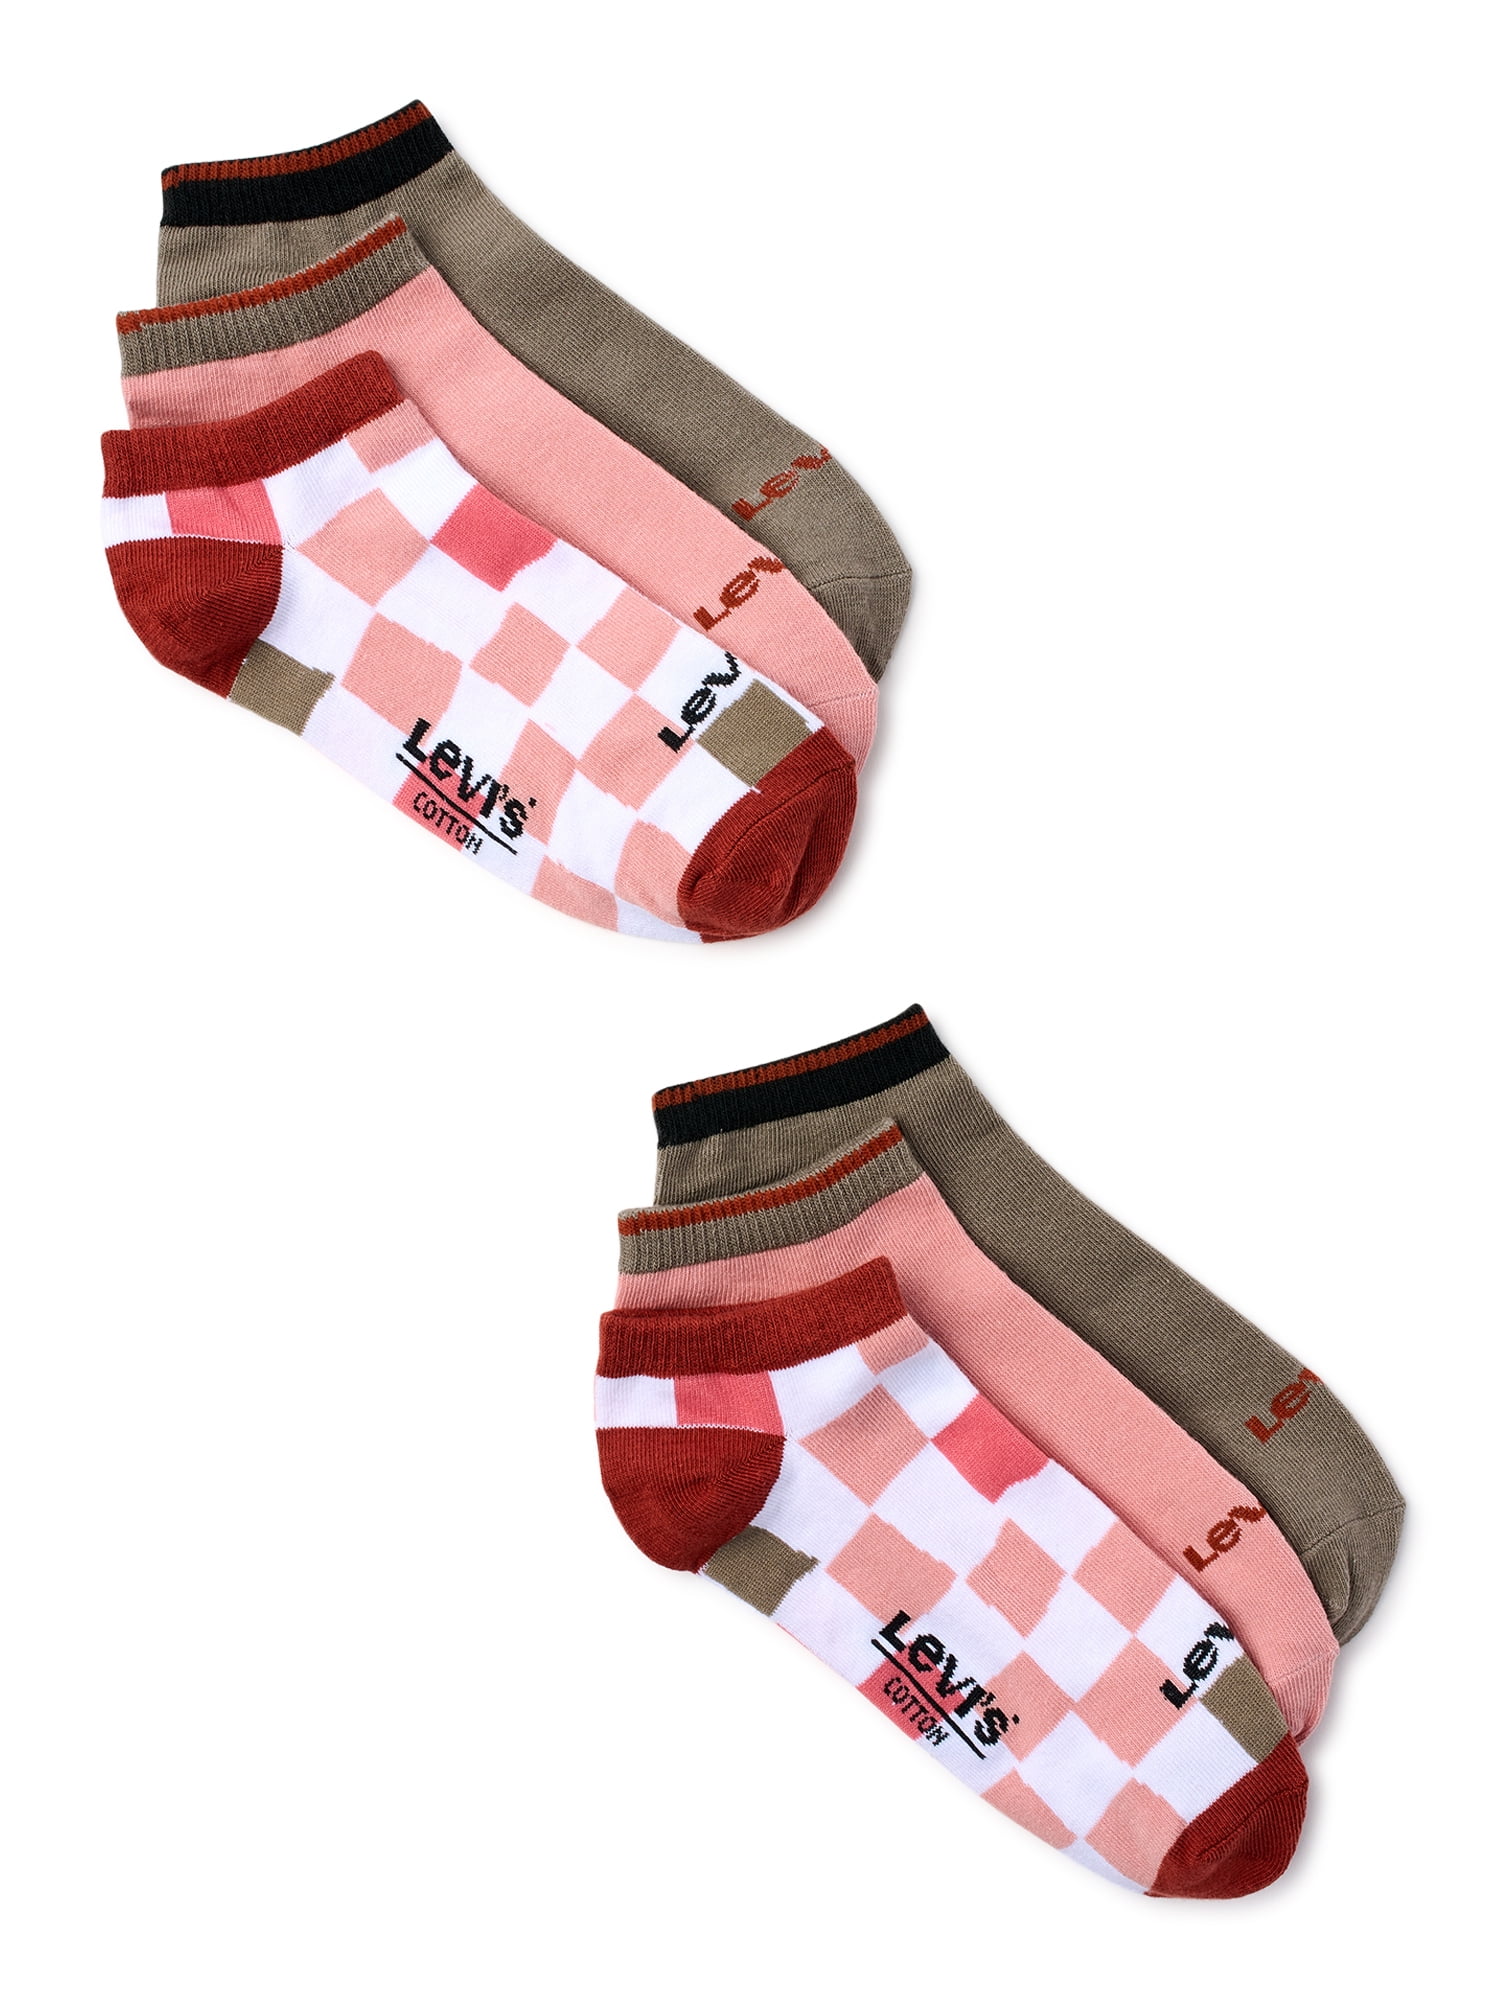 Levi's Checkerboard Cut Socks, 6-Pack, Sizes 10-13 - Walmart.com